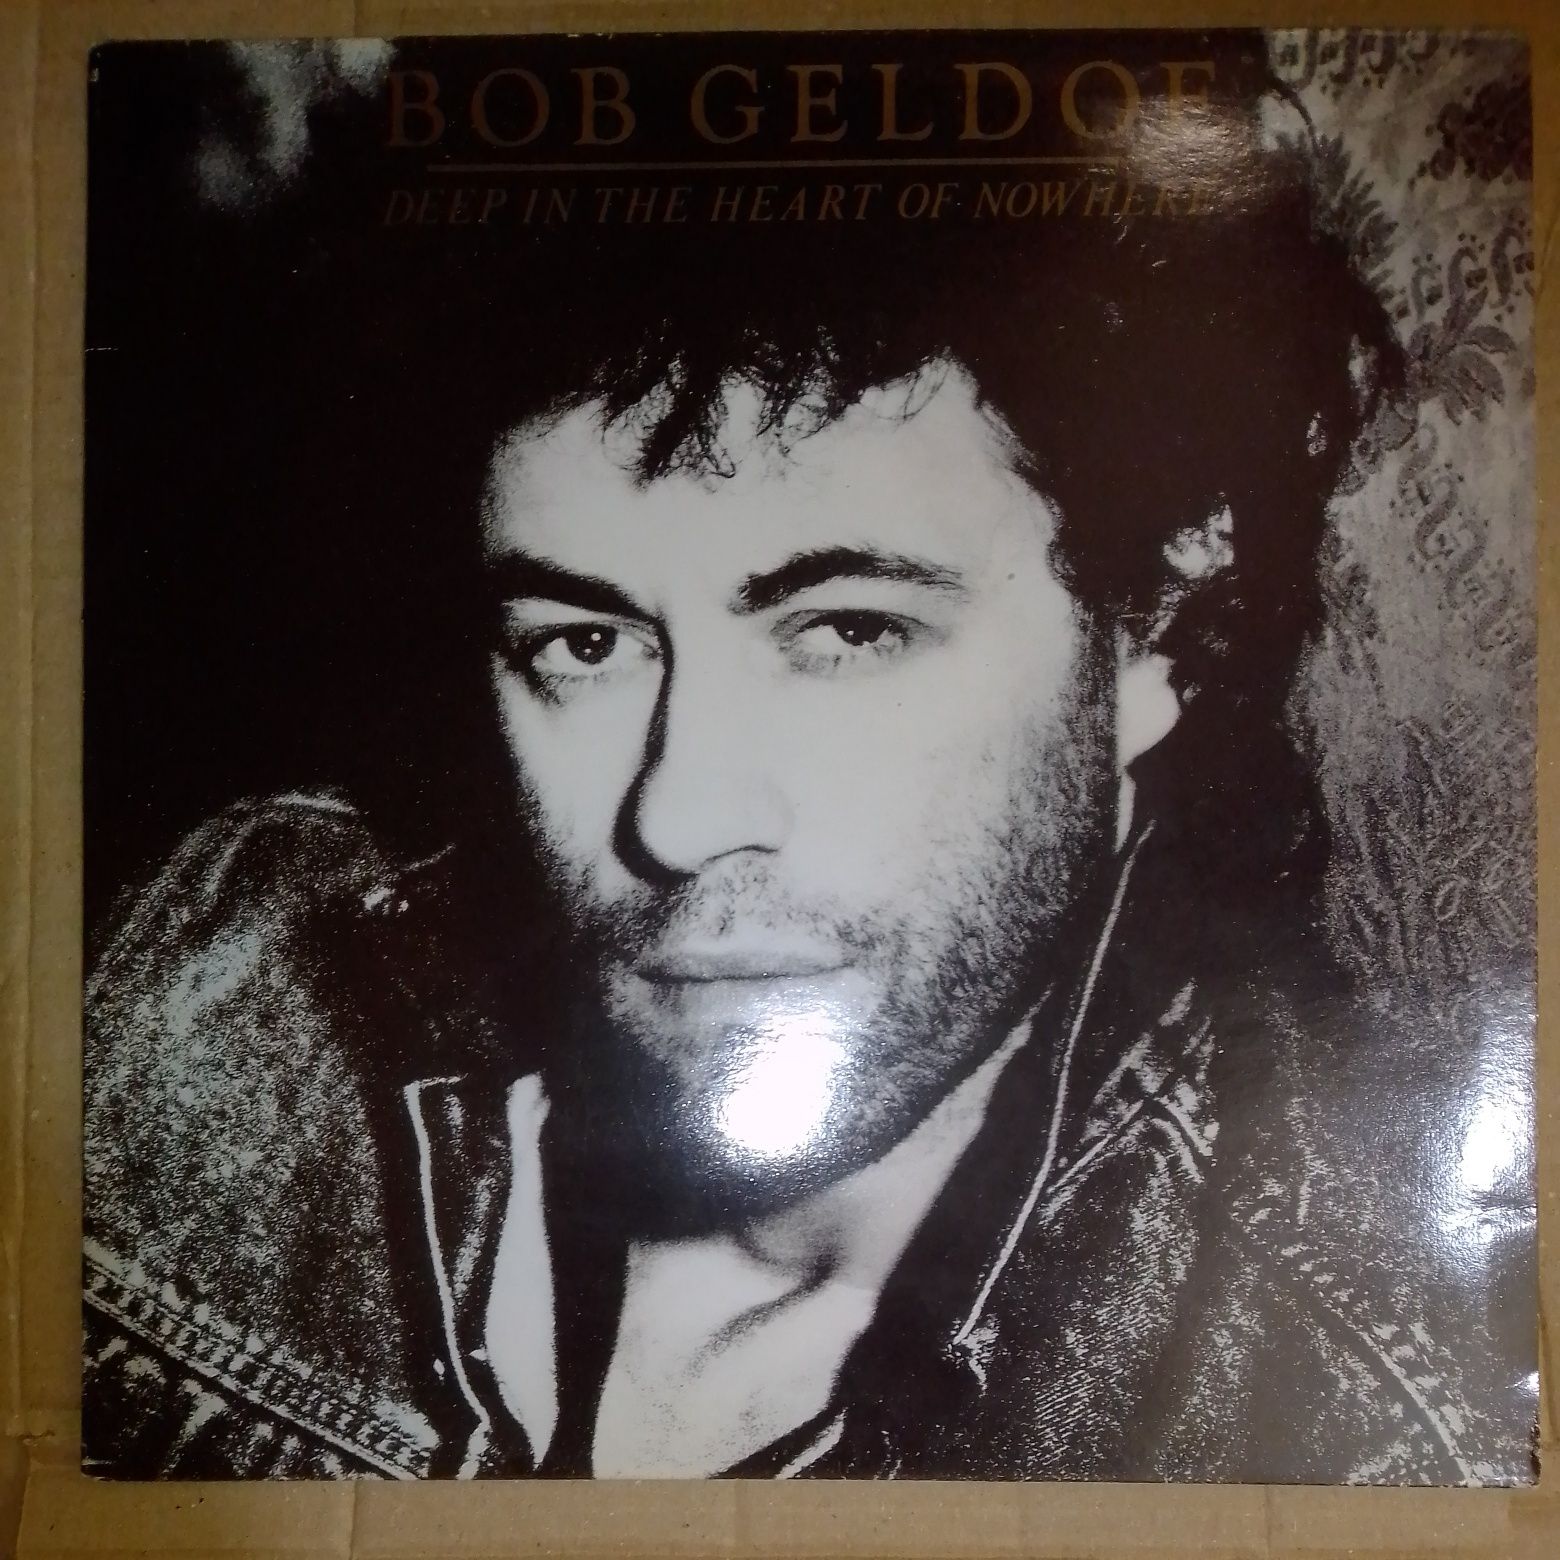 Виниловая пластинка Bob GELDOF (Ex-Boomtown Rars).
Mercury,